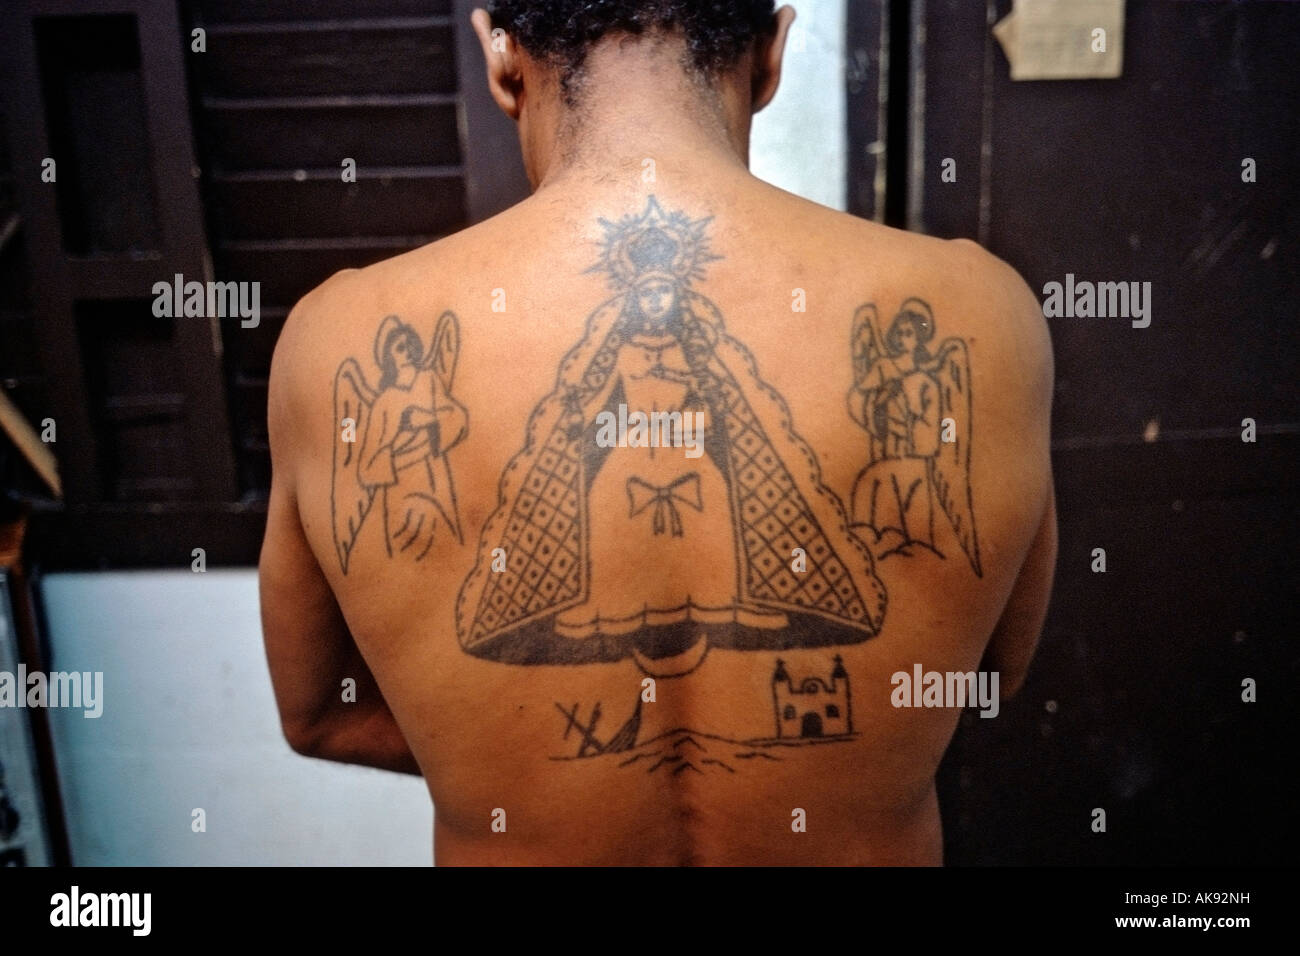 Tatuaje con simbolismo religioso en la parte posterior del hombre cubano. Foto de stock